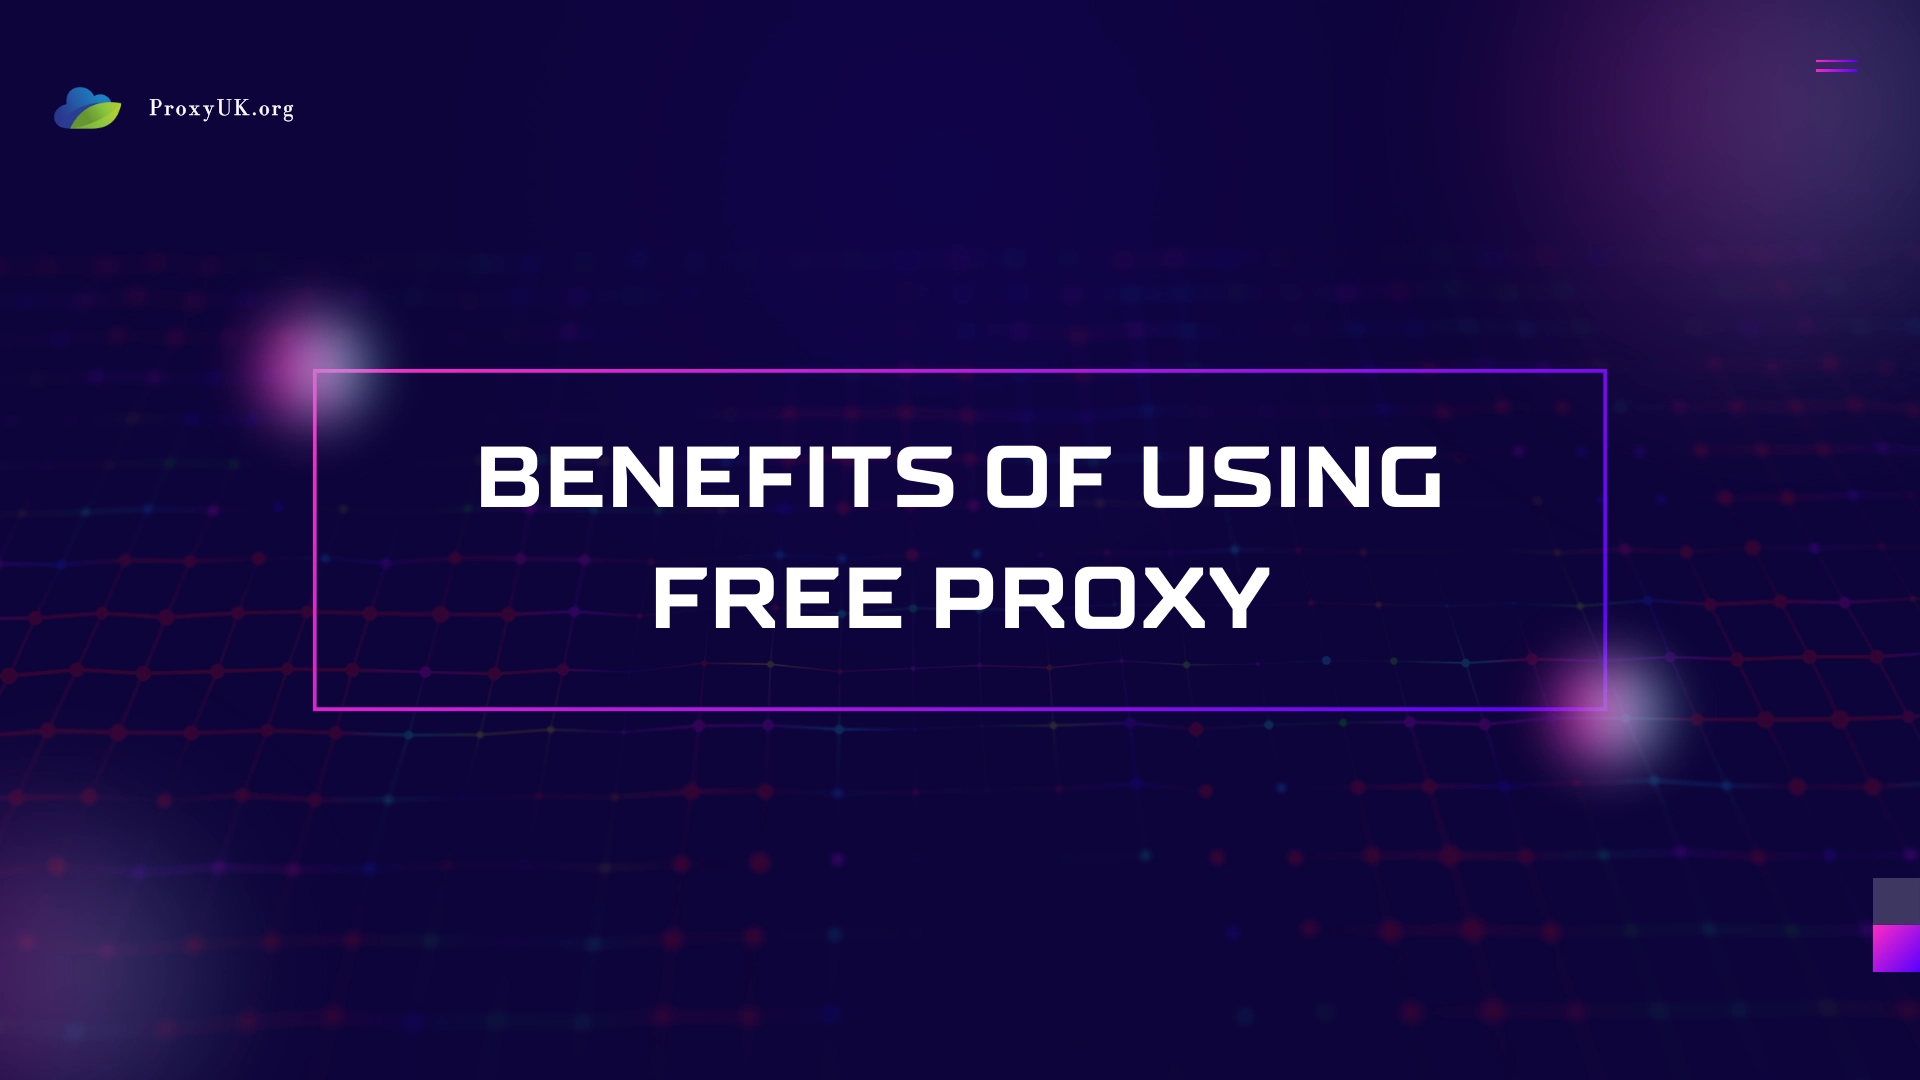 Benefits of using free proxy